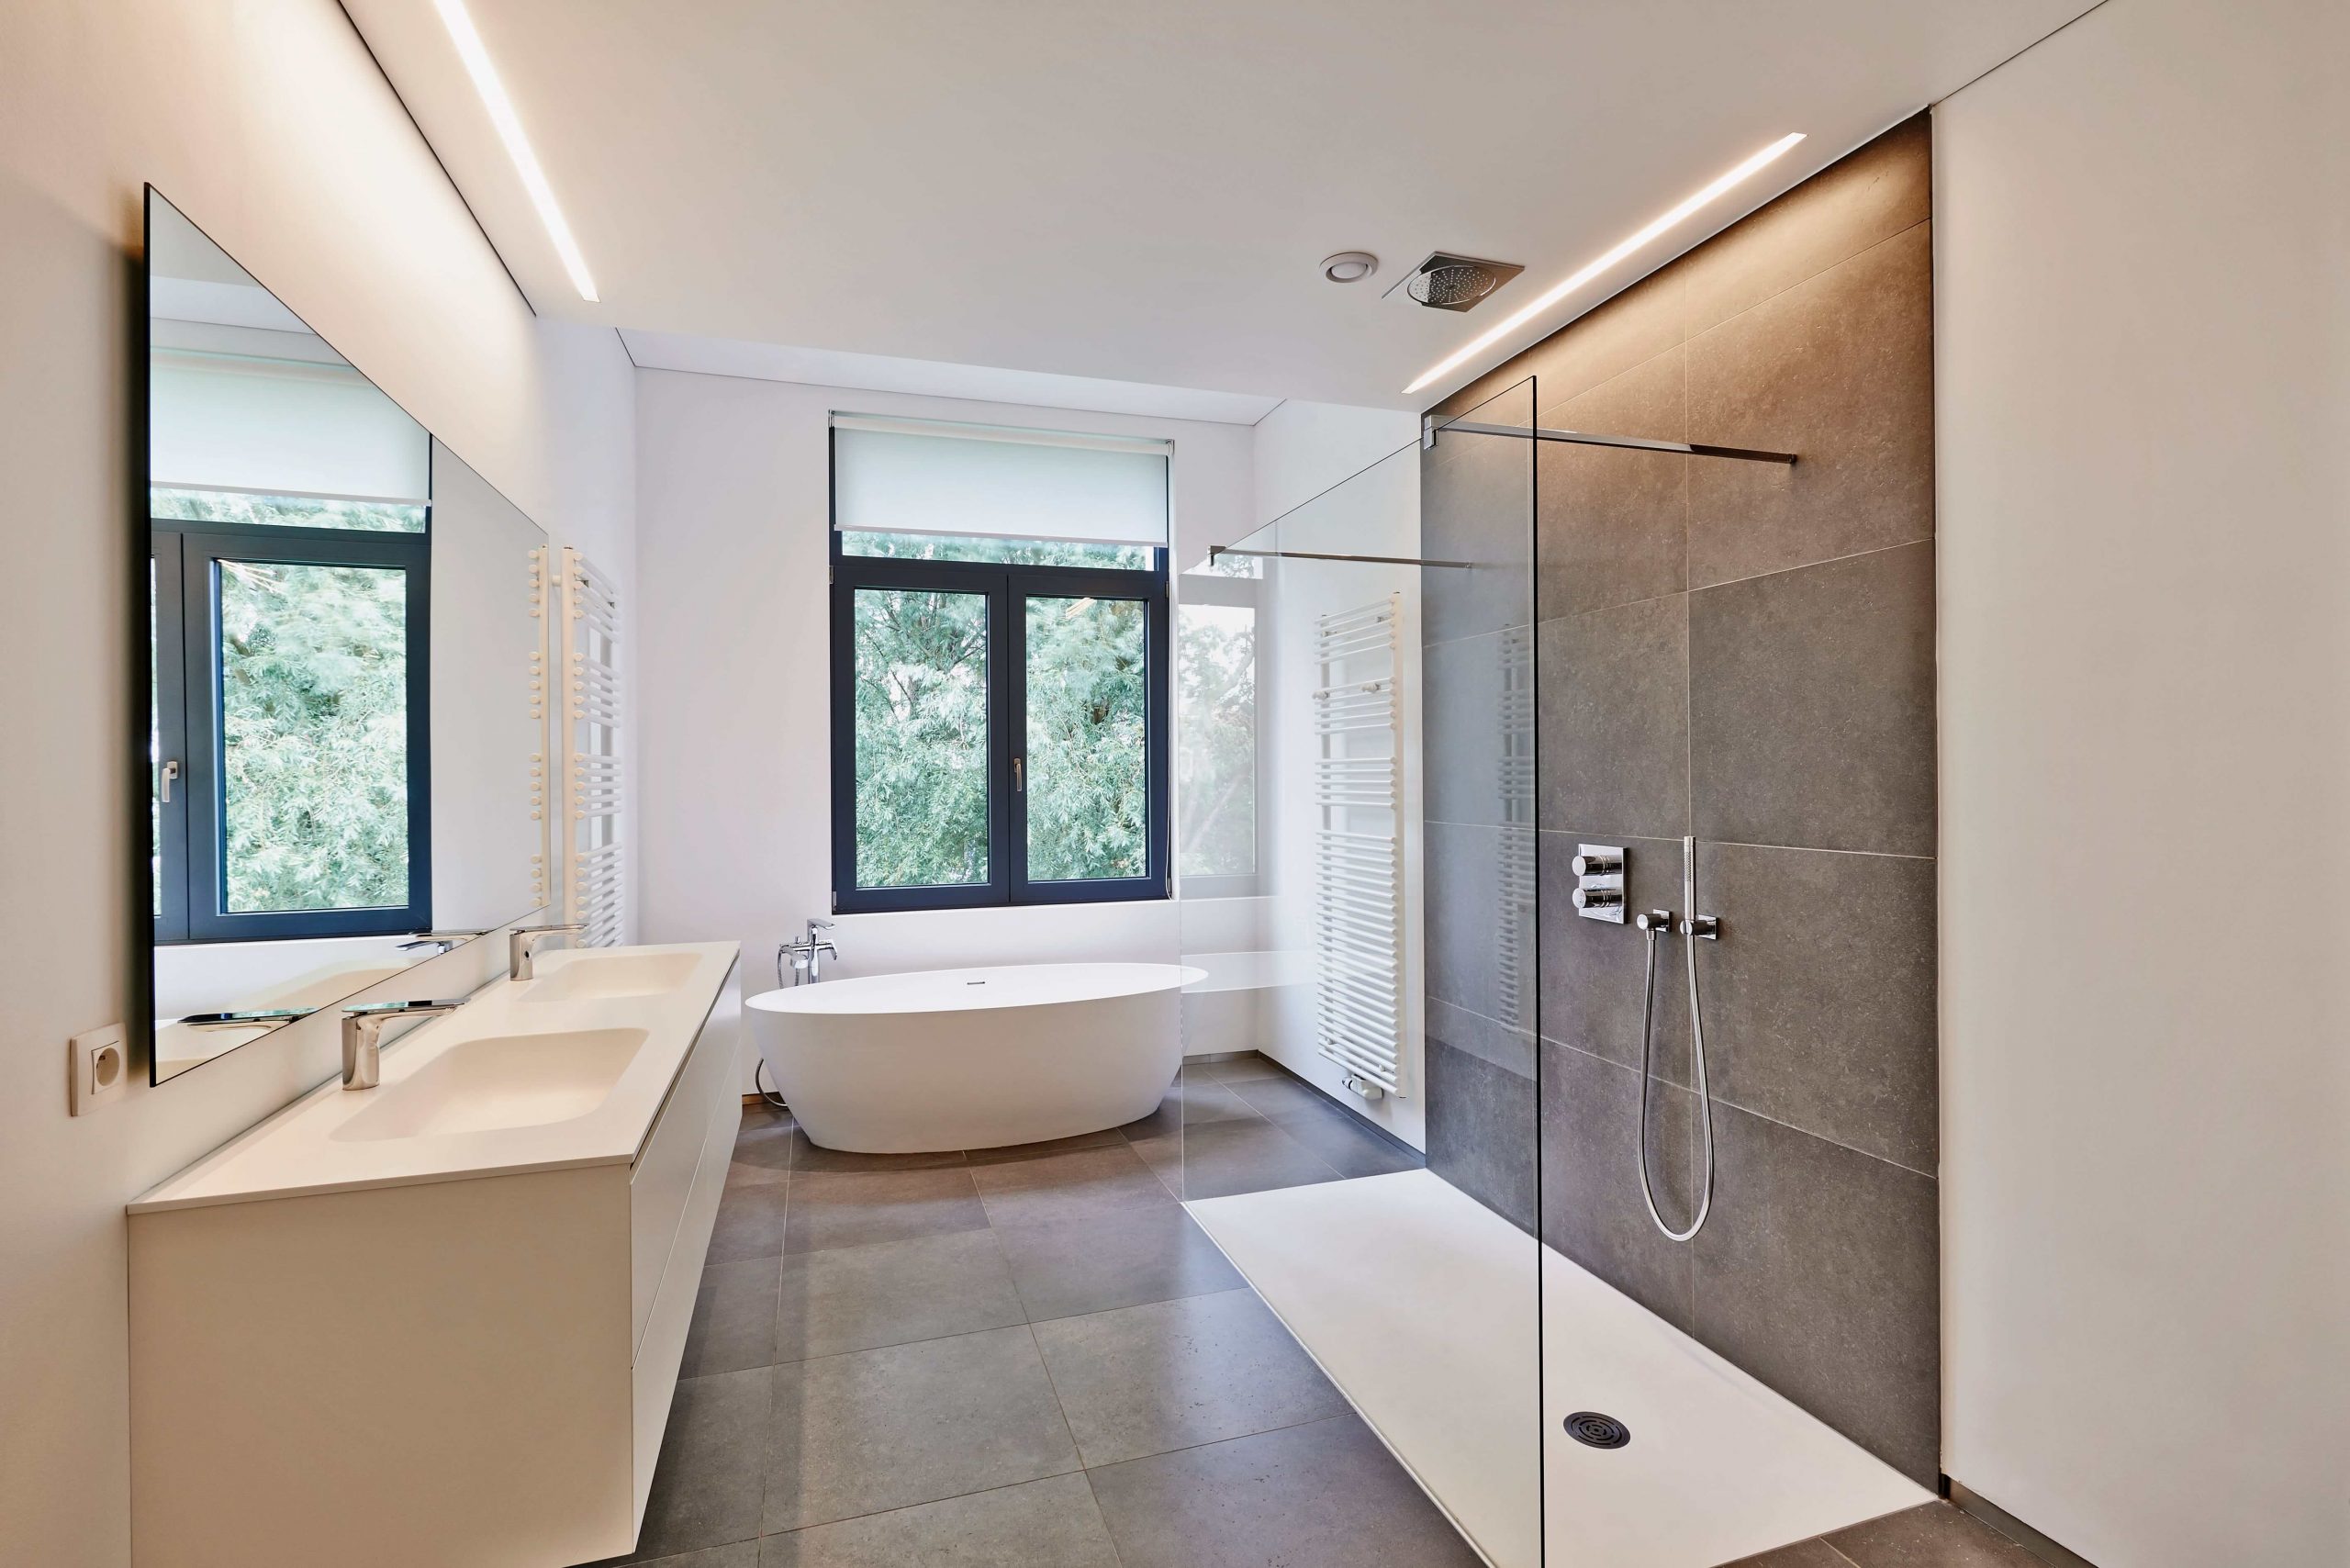 Bathtub & Shower Reglazing And Refinishing